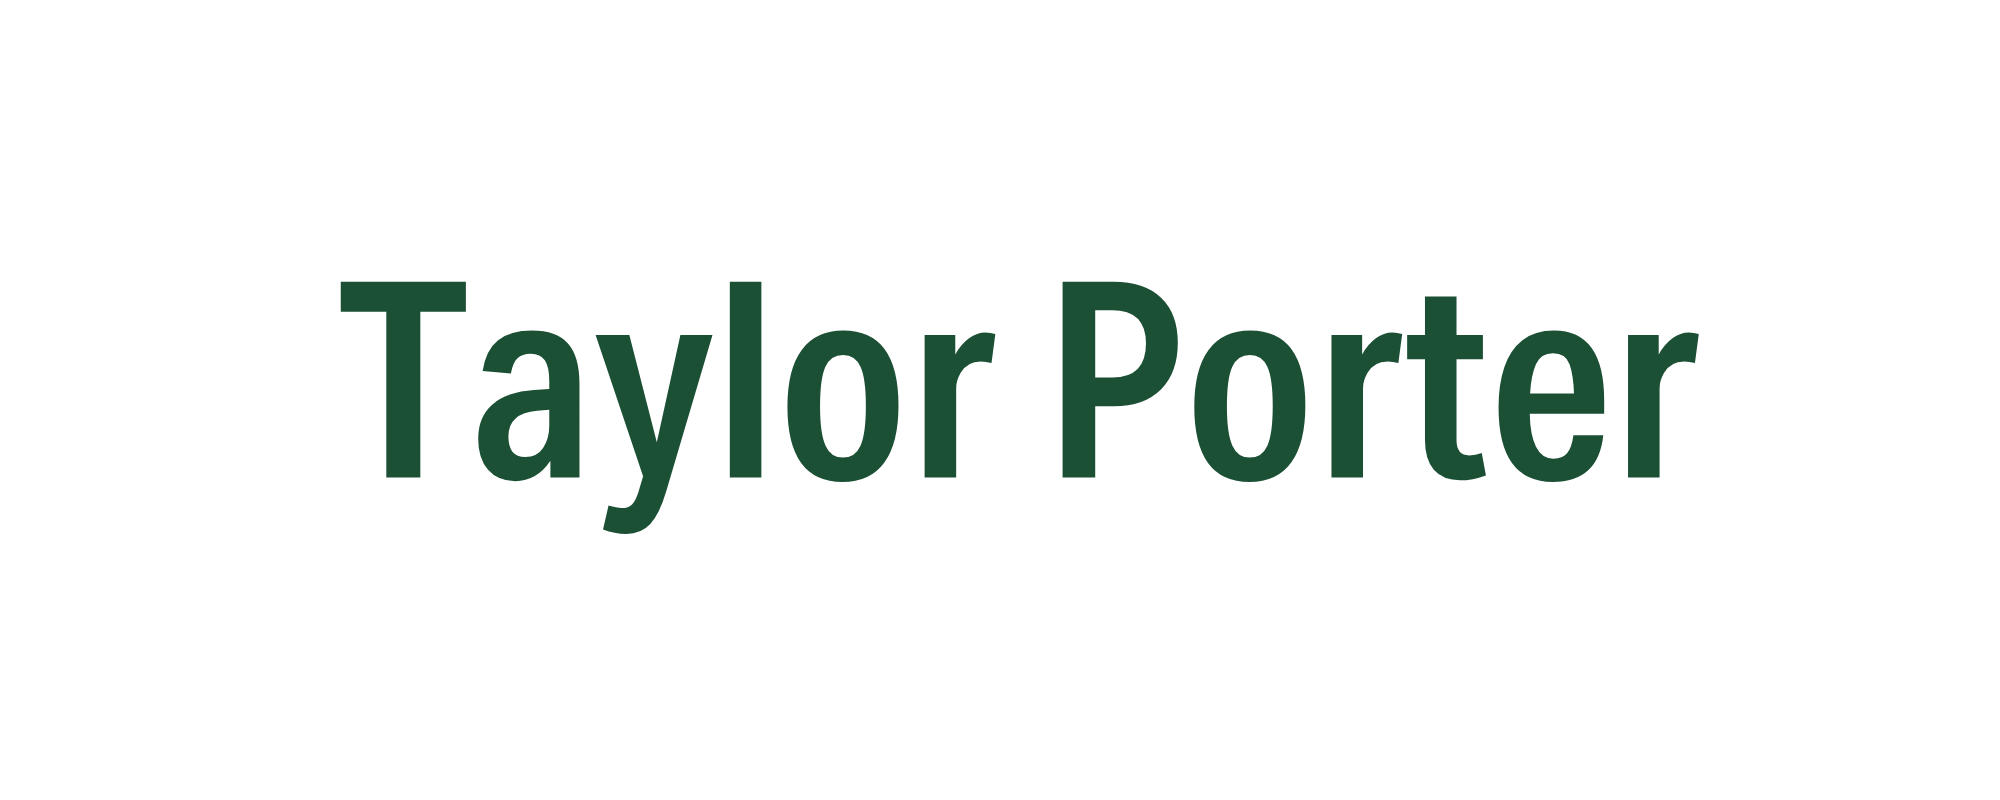 Taylor Porter